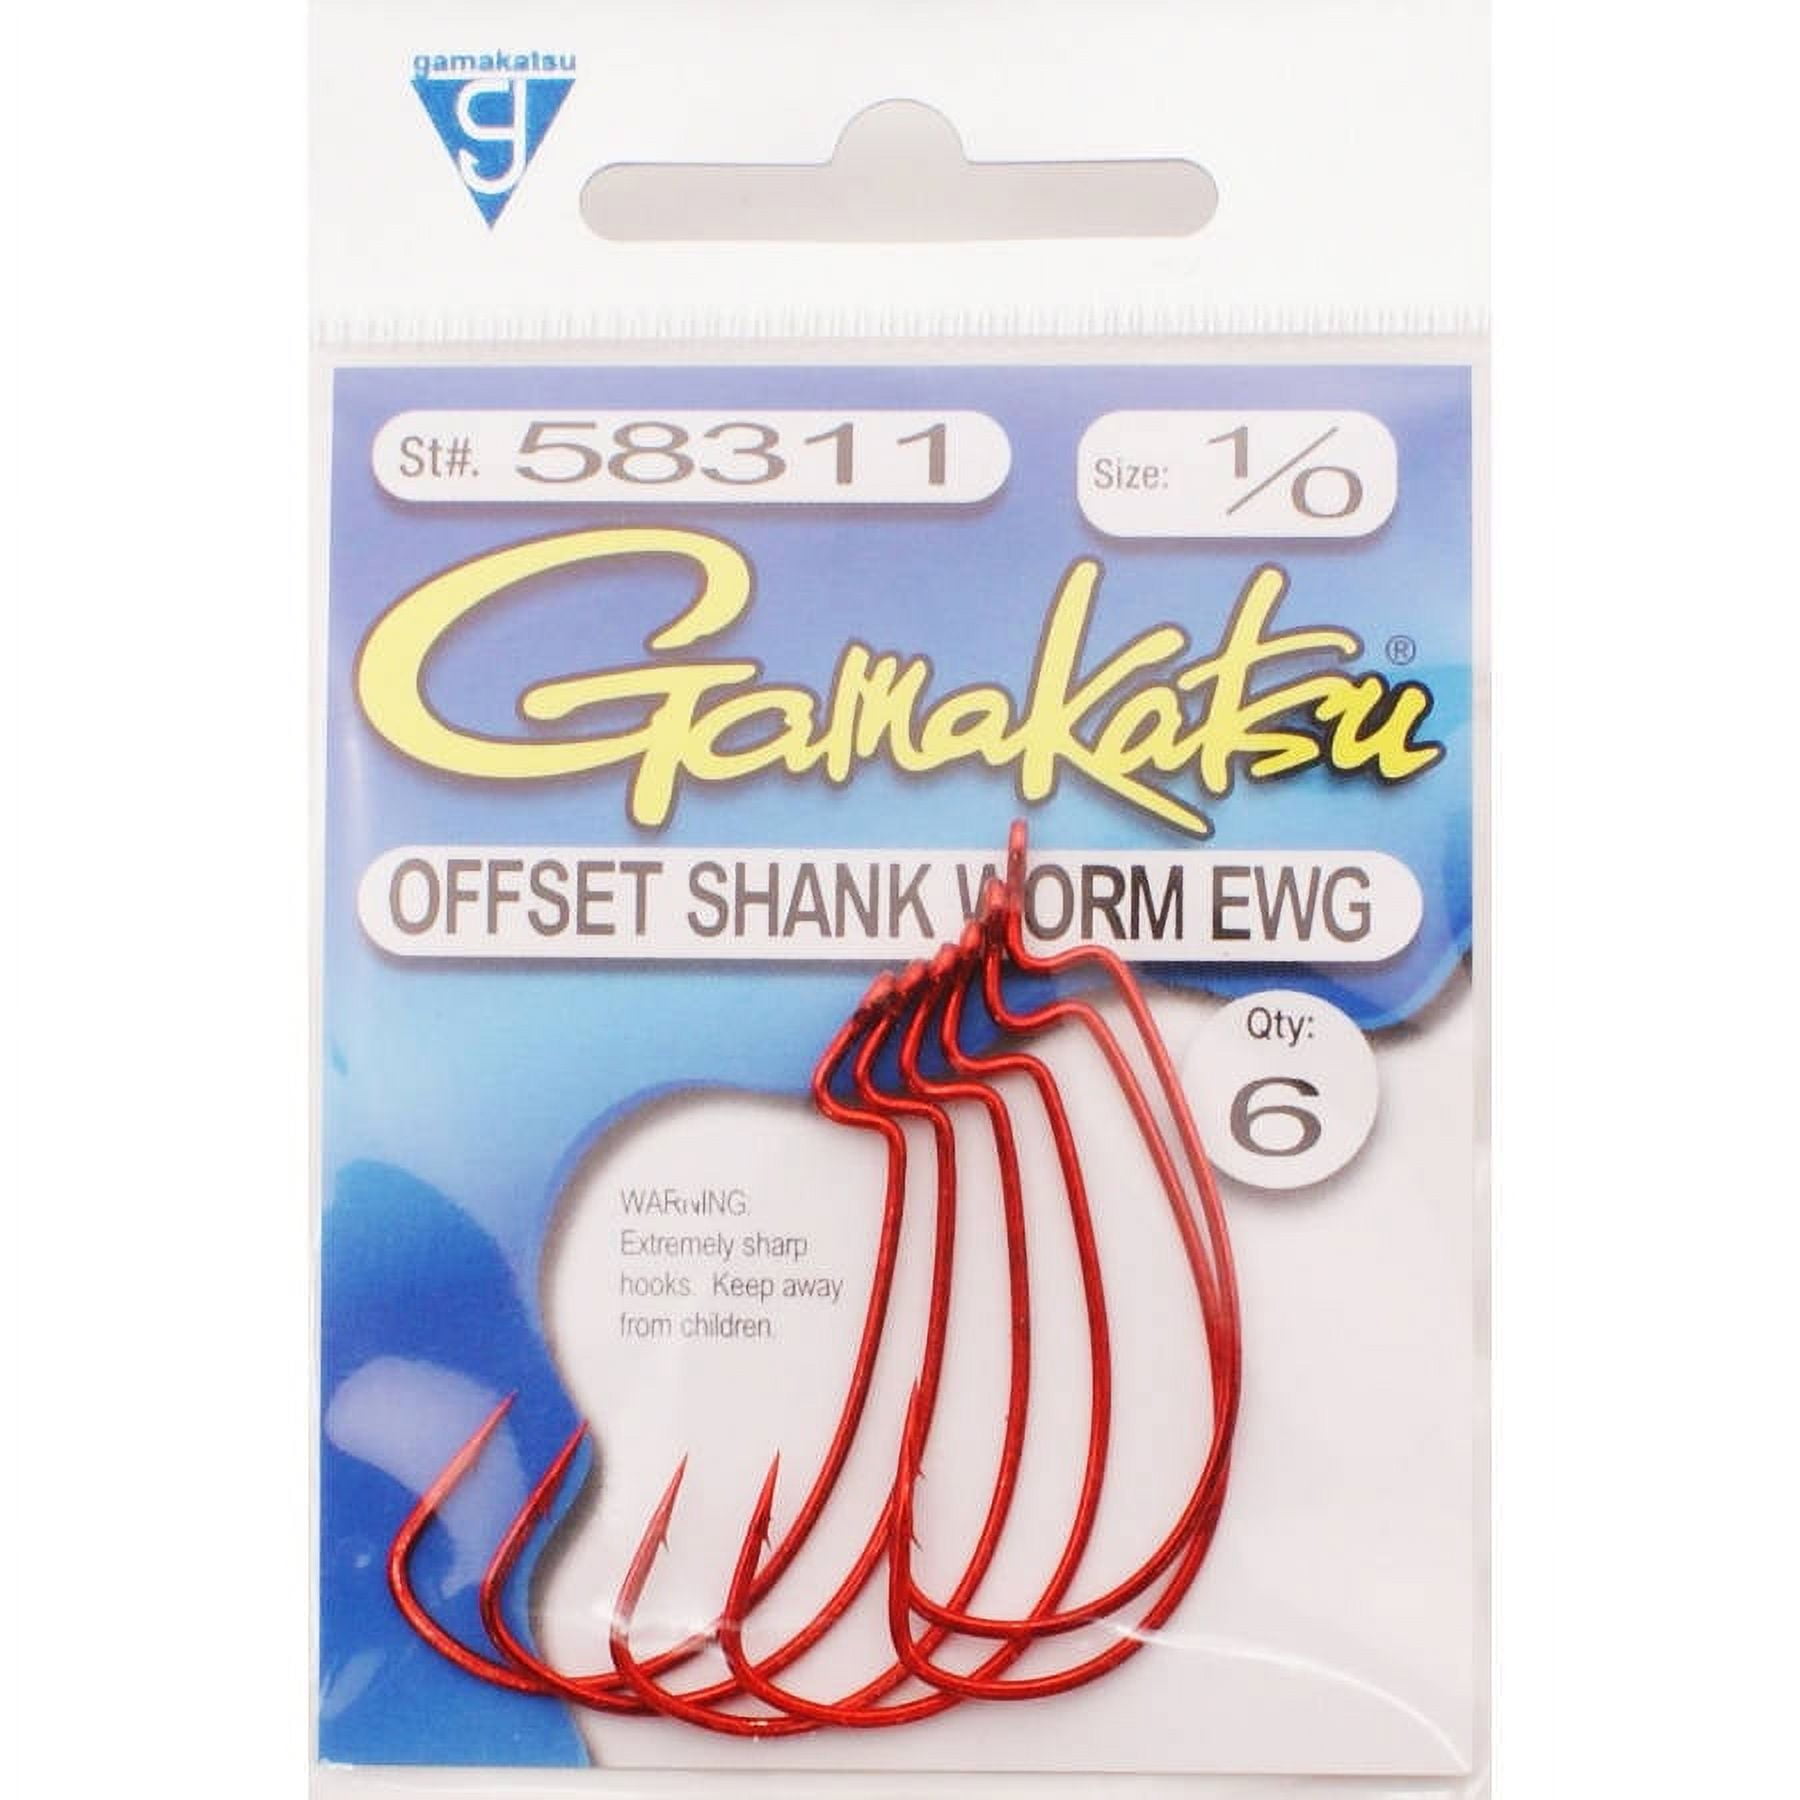 Gamakatsu Extra Wide Gap Offset Shank Worm Hooks, Size 3, 6 Pack